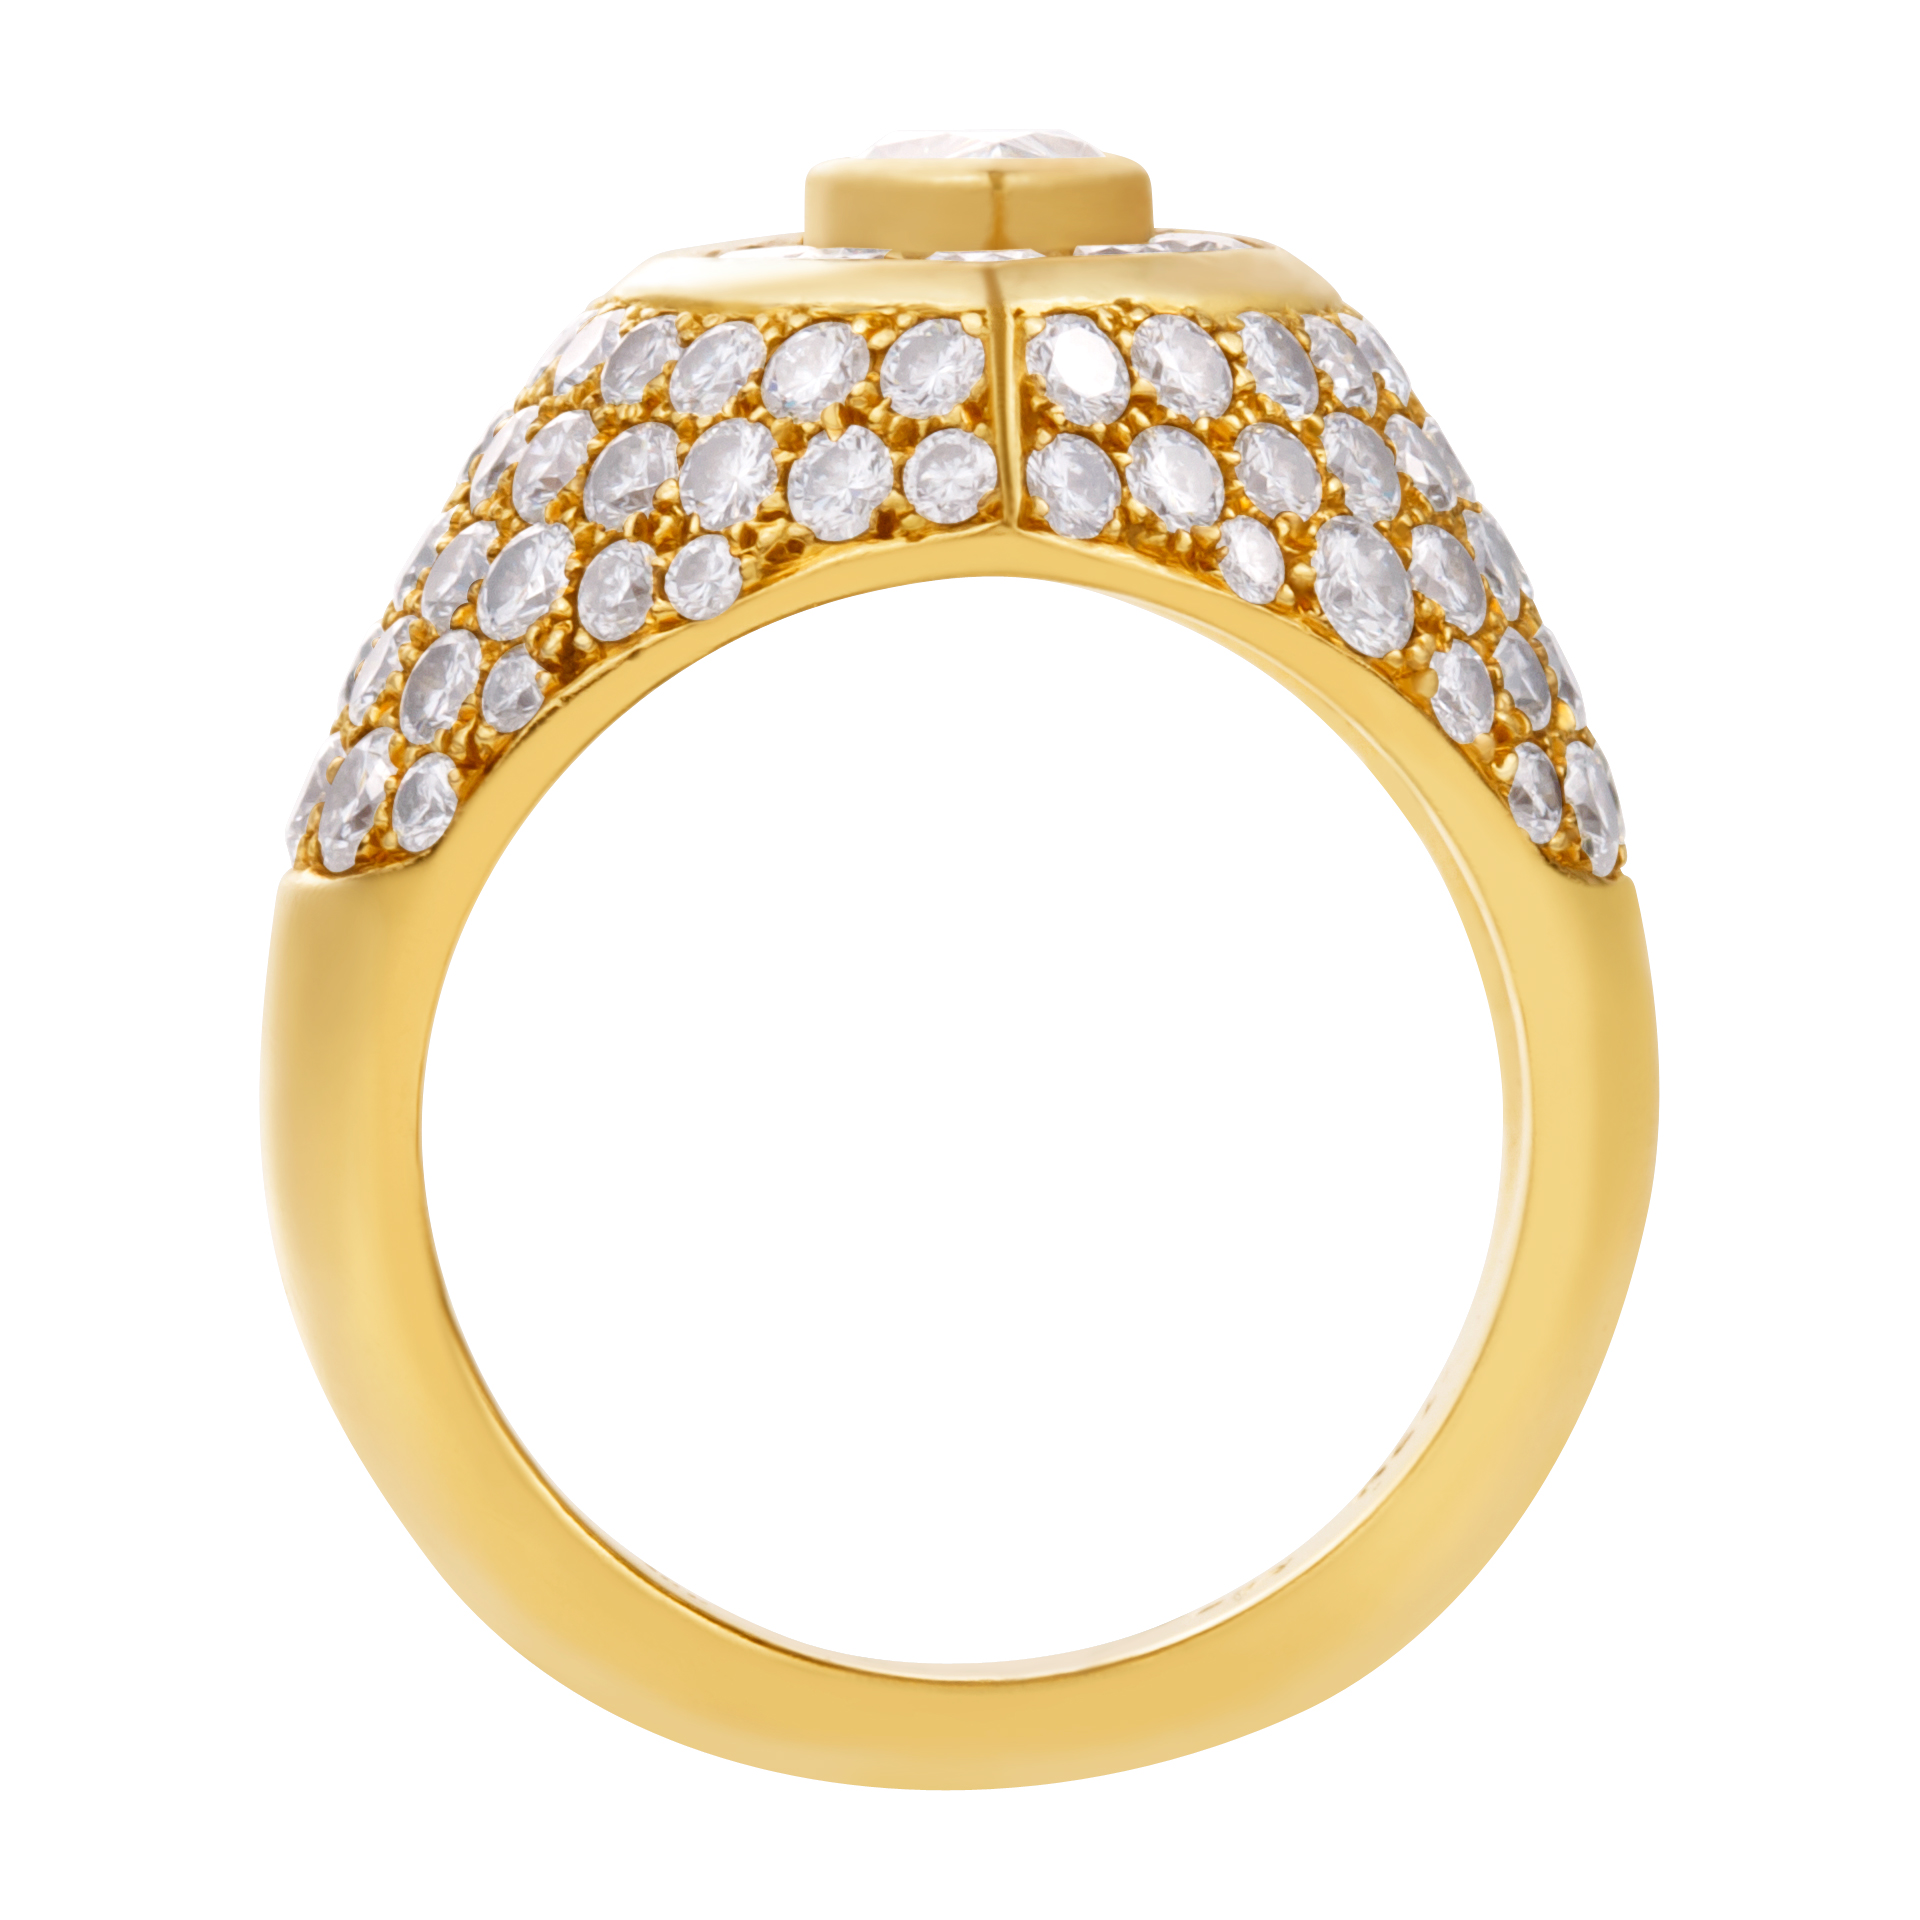 Kutchinsky 18K yellow gold diamond ring, total diamonds weight approx. 4.00 carats. All diamonds estimate E-F color, VVS clarity. image 5